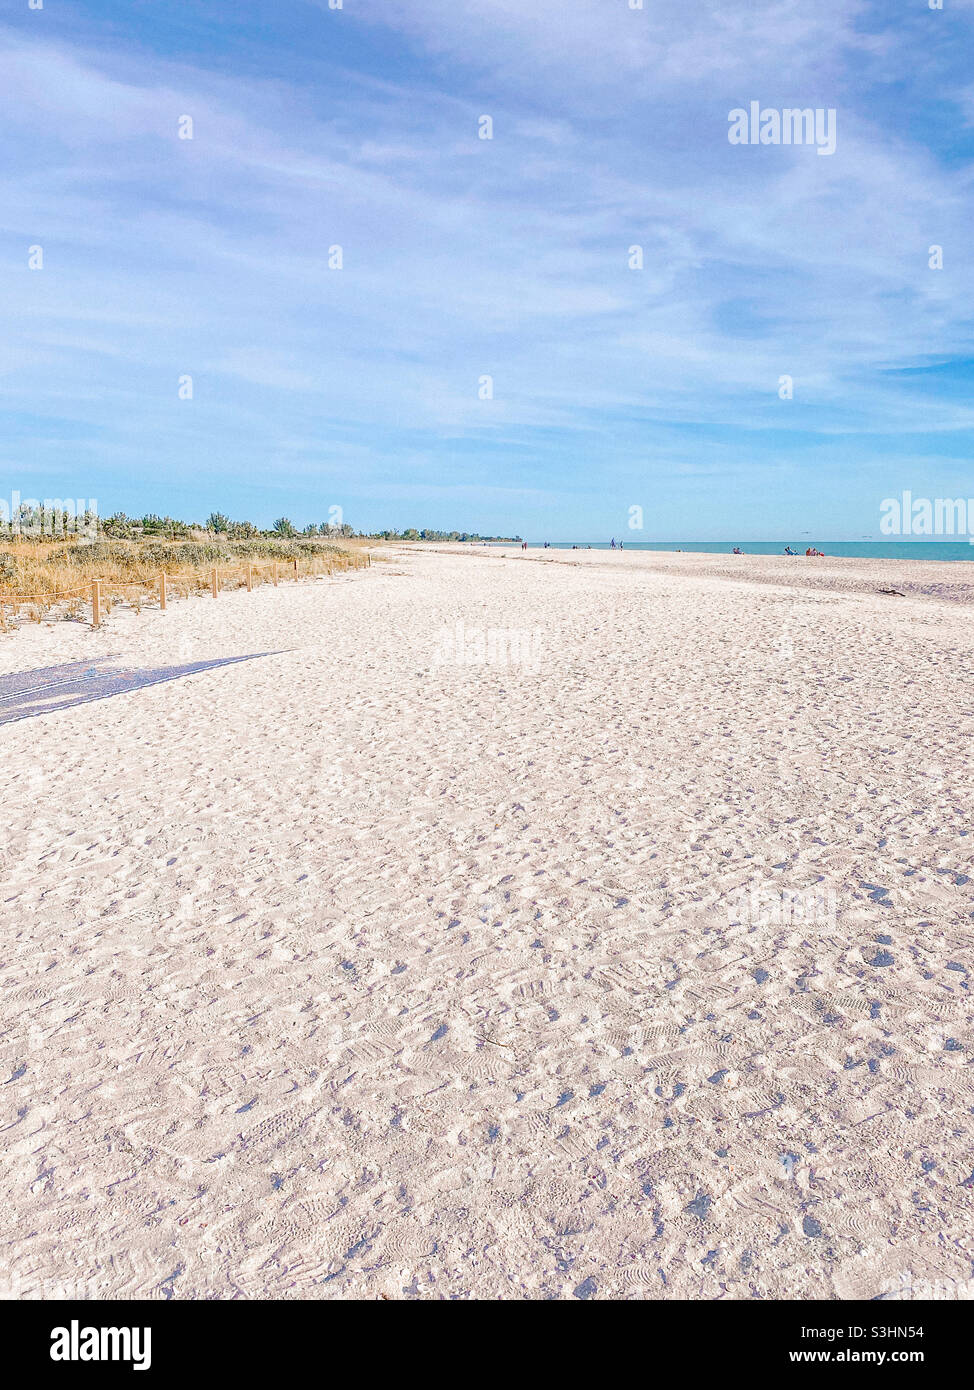 Spiaggia di sabbia bianca vuota Foto Stock